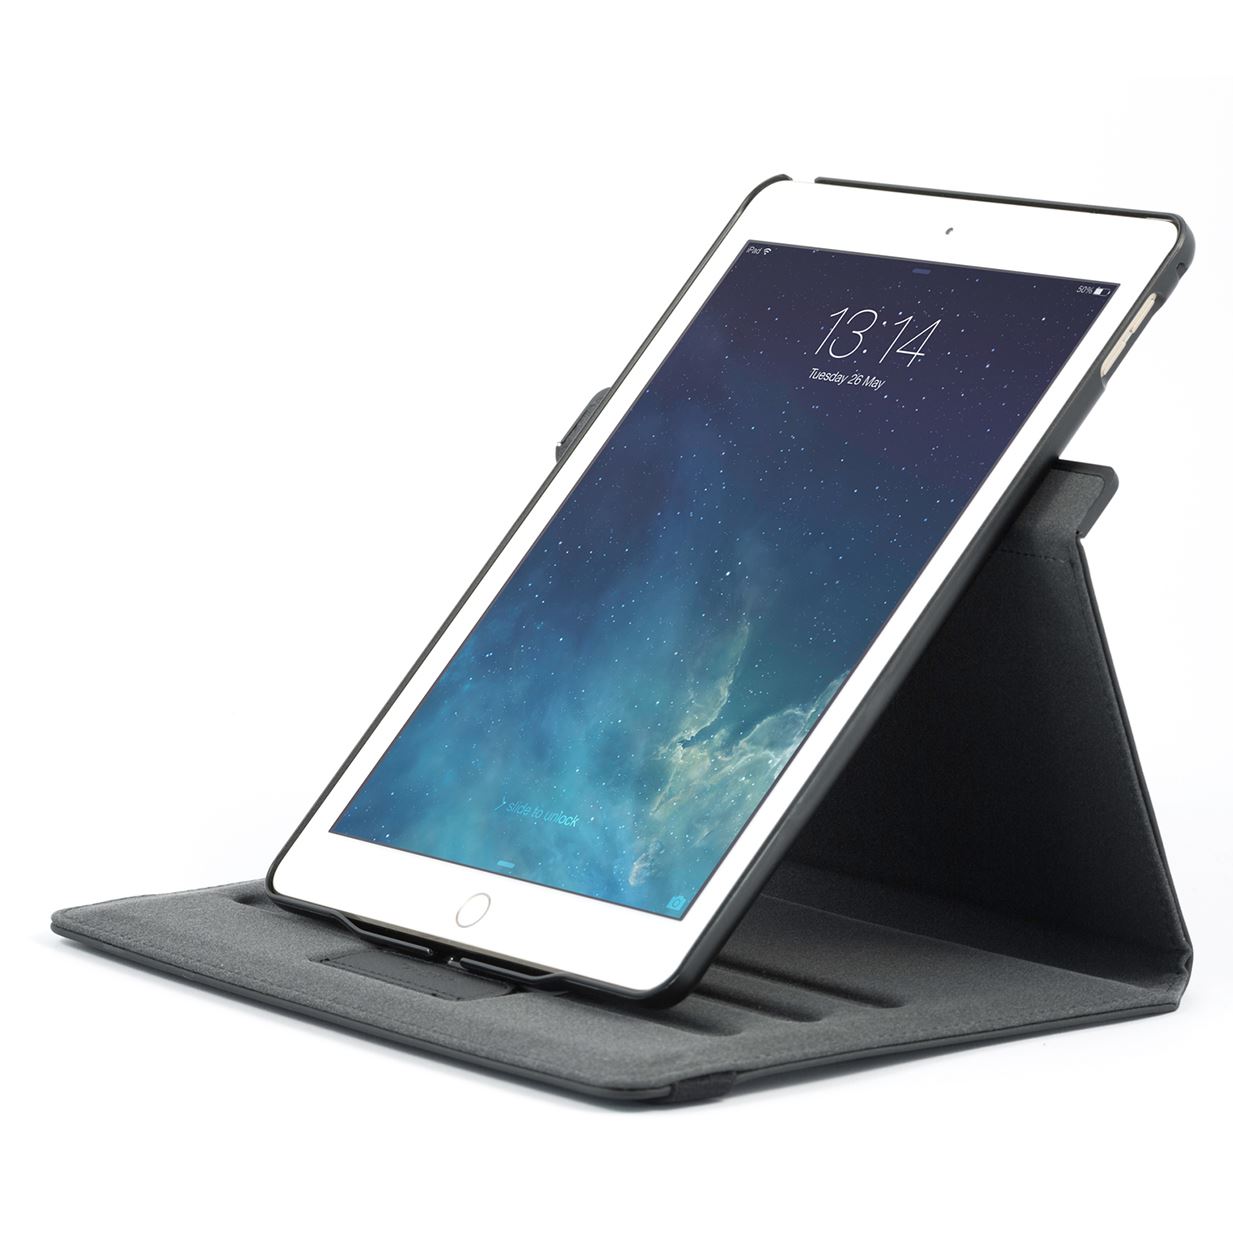 Ontwikkelen Onverenigbaar Kanon Versavu™ 360 Degree Rotating Case for iPad Air 2 - Black